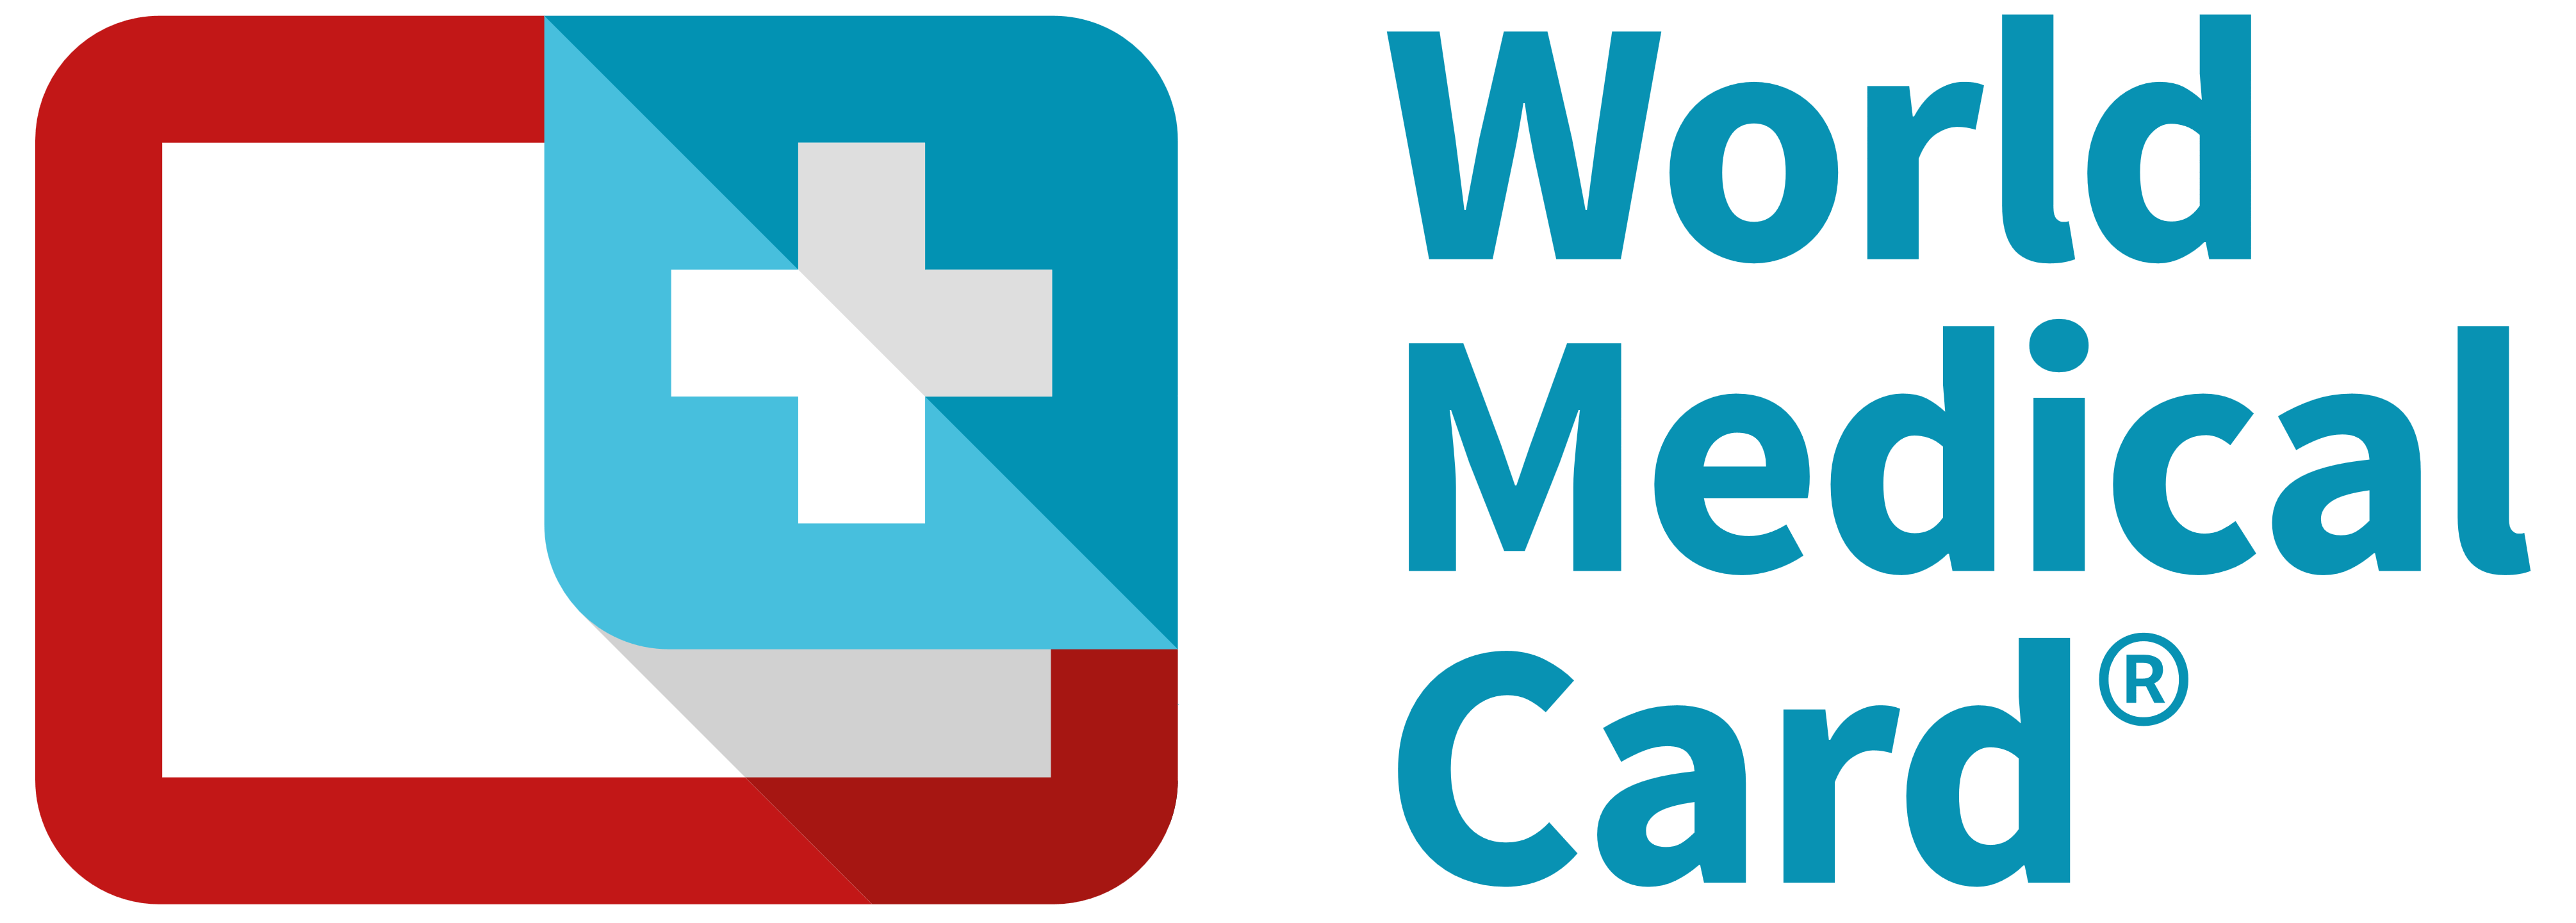 World Medical Card - WMC logo, logotype